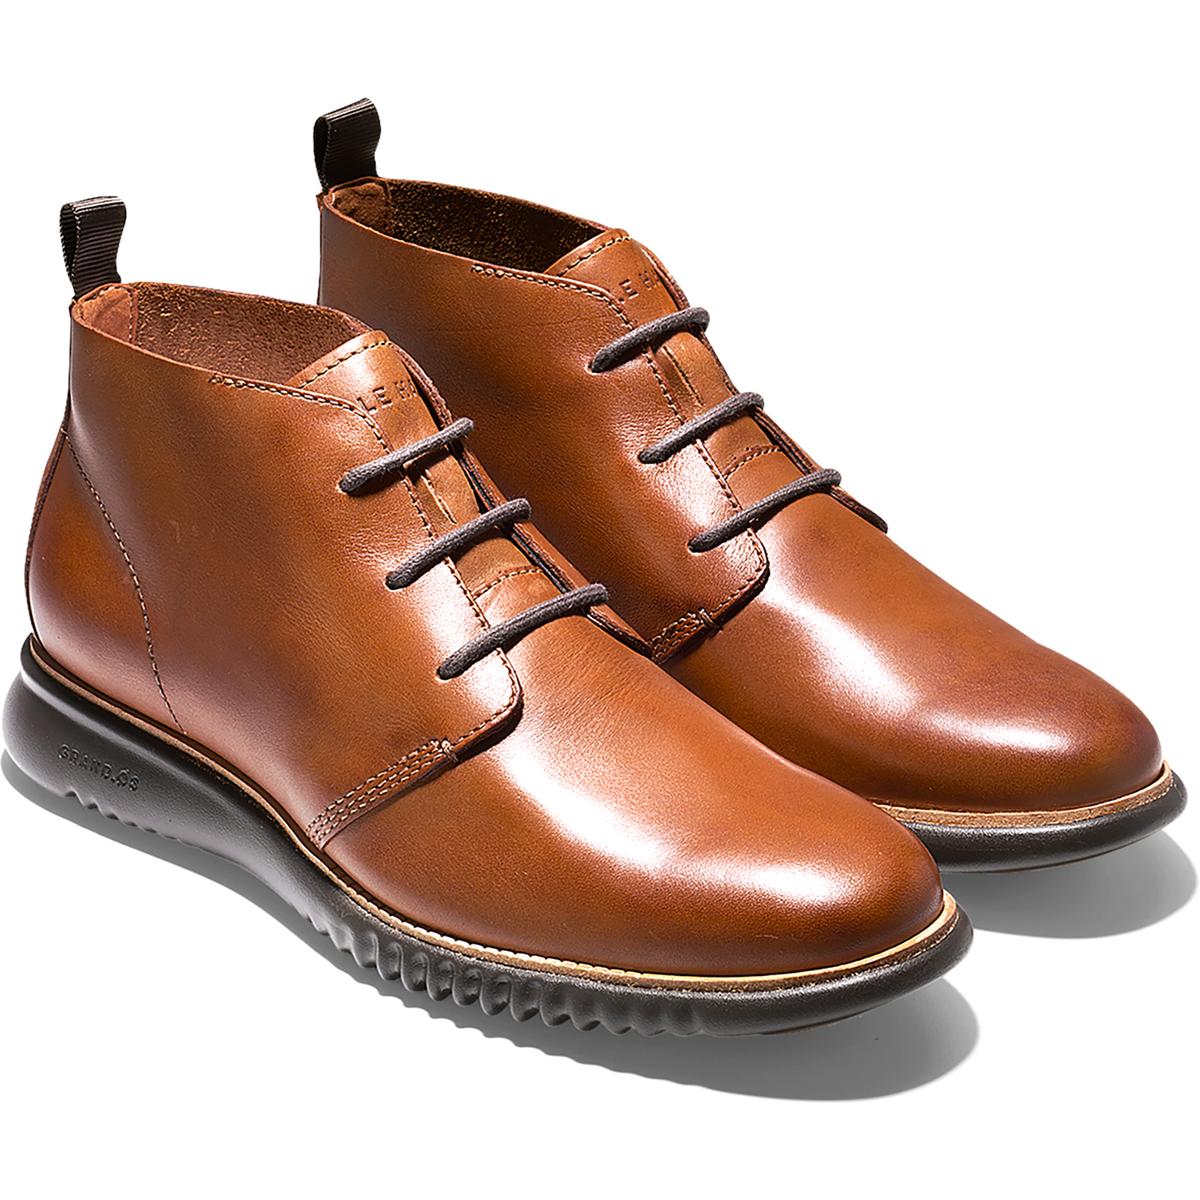 Cole Haan Mens 2.Zerogrand Tan Leather Chukka Boots Shoes 9 Medium (D ...